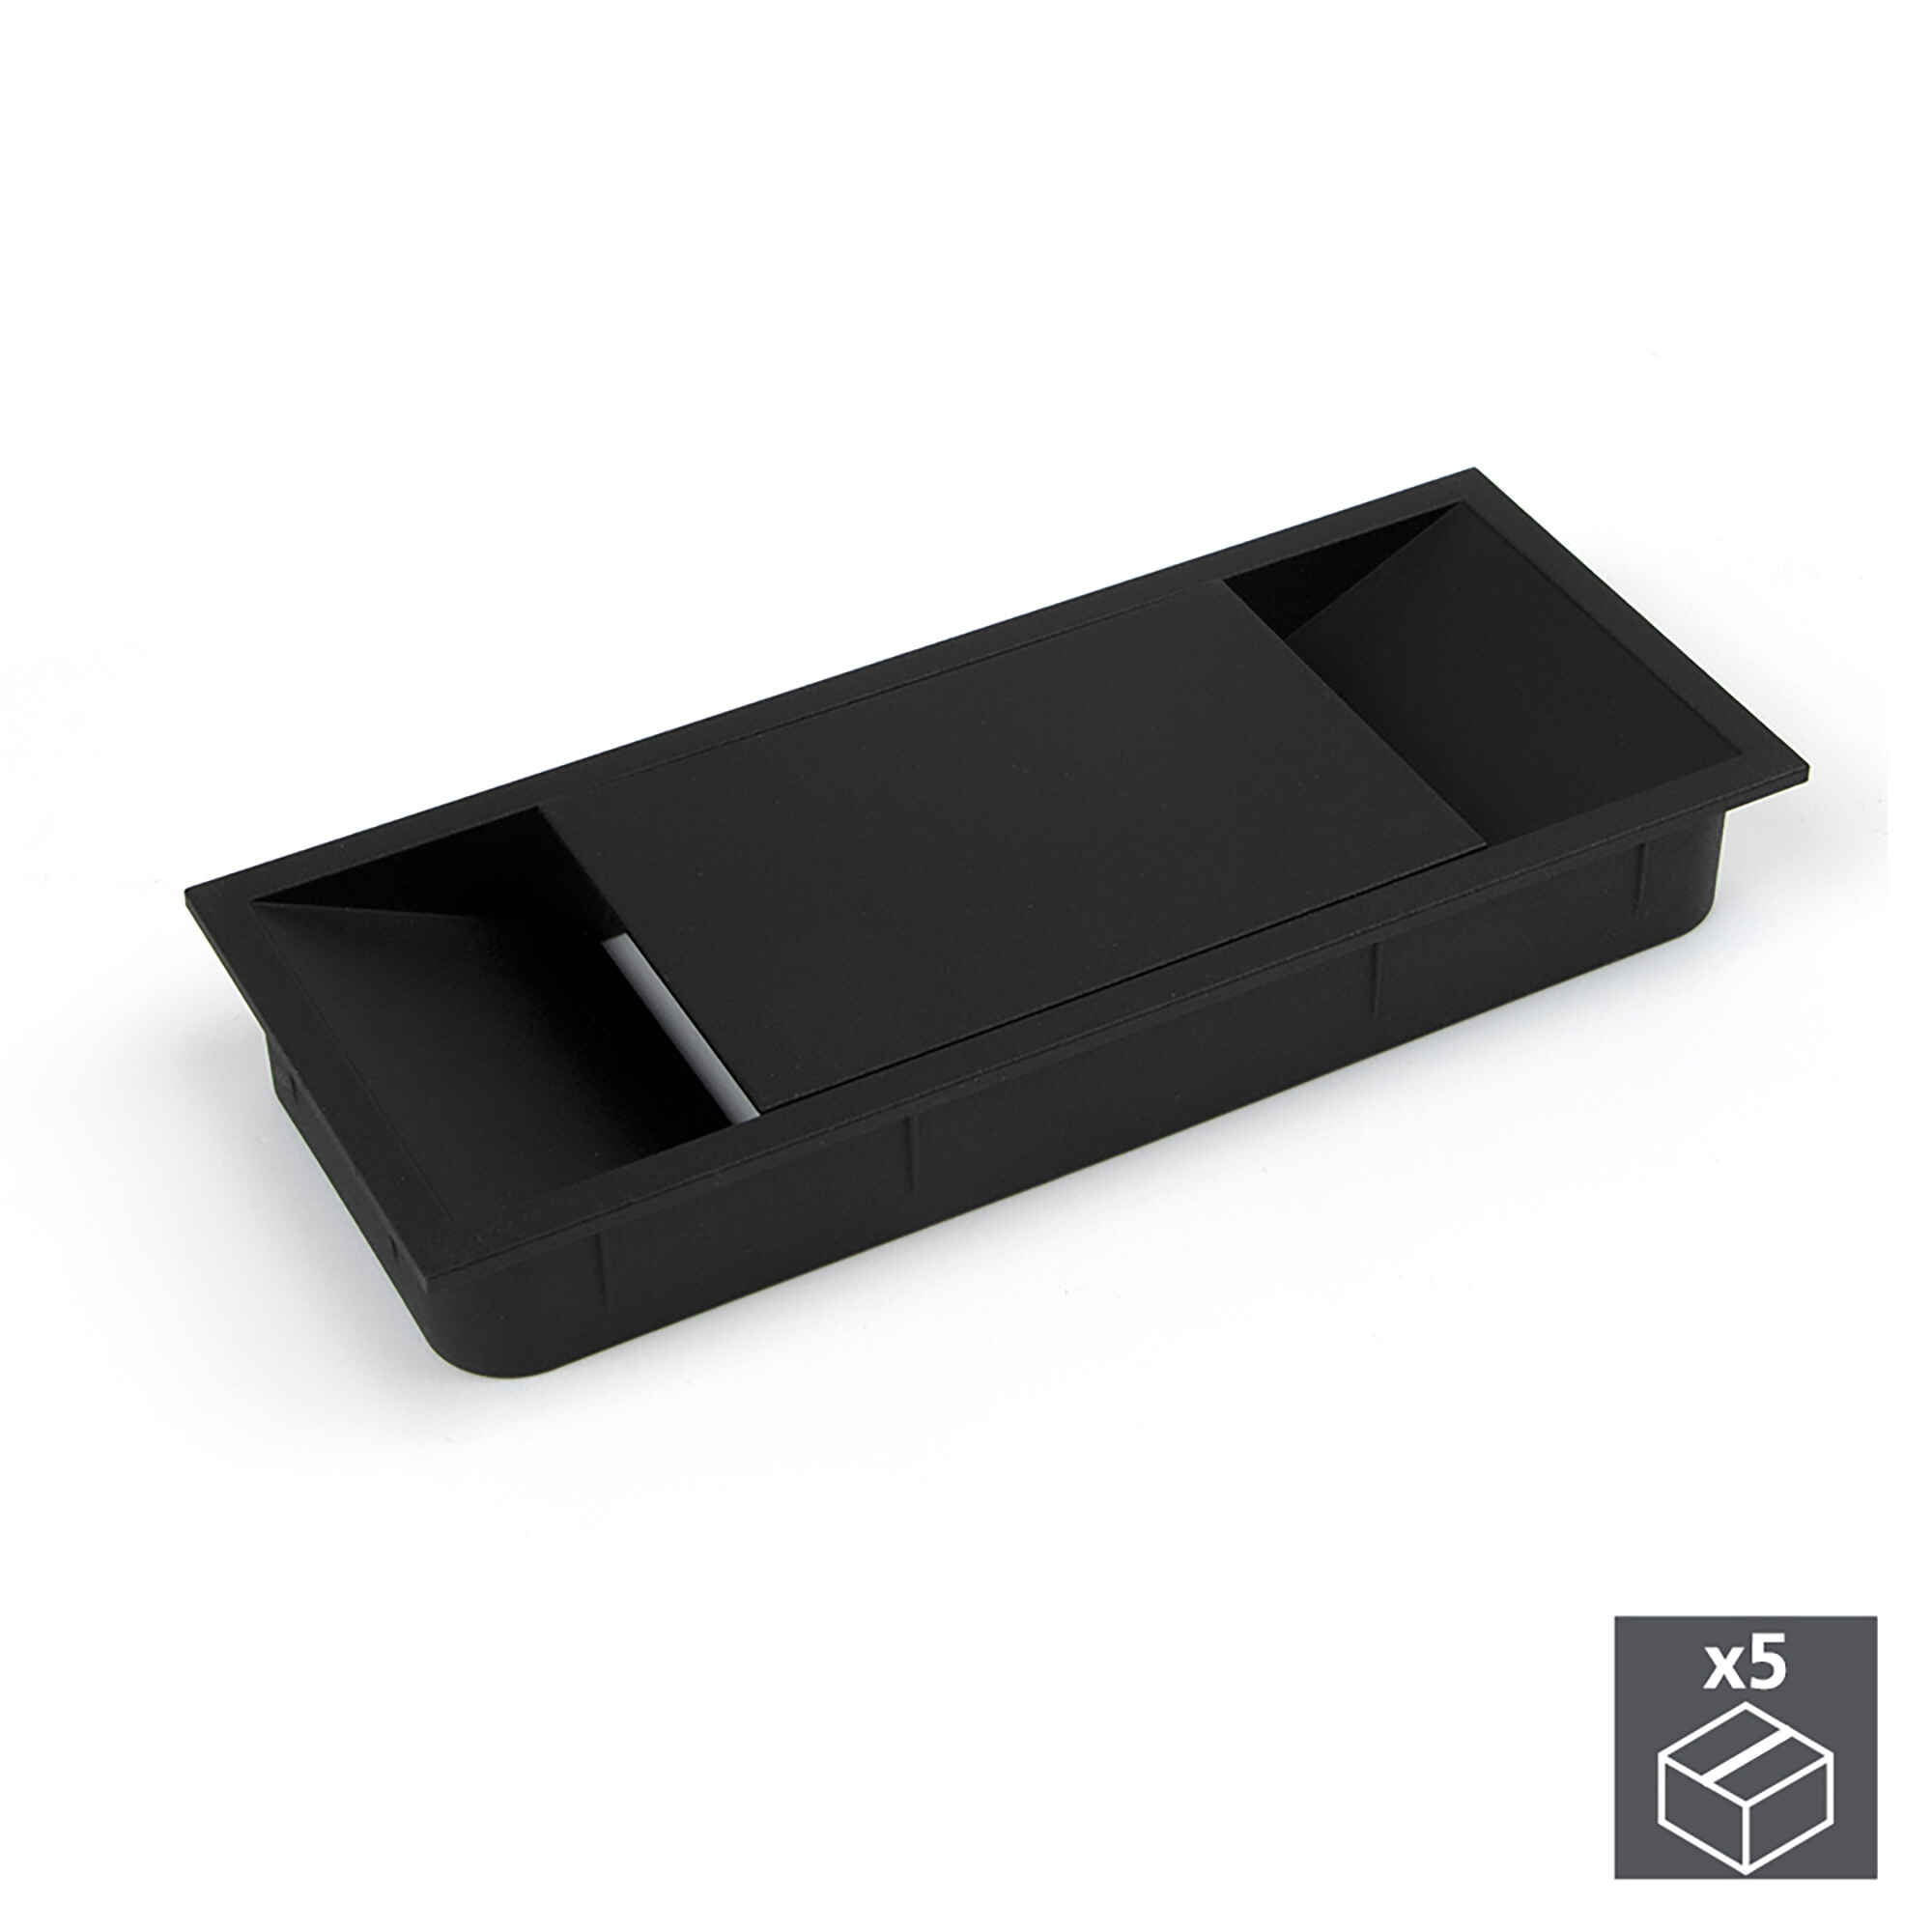 Pasacables mesa, rectangular, 152 x 61 mm, para encastrar, Plástico, Negro, 5 ud.